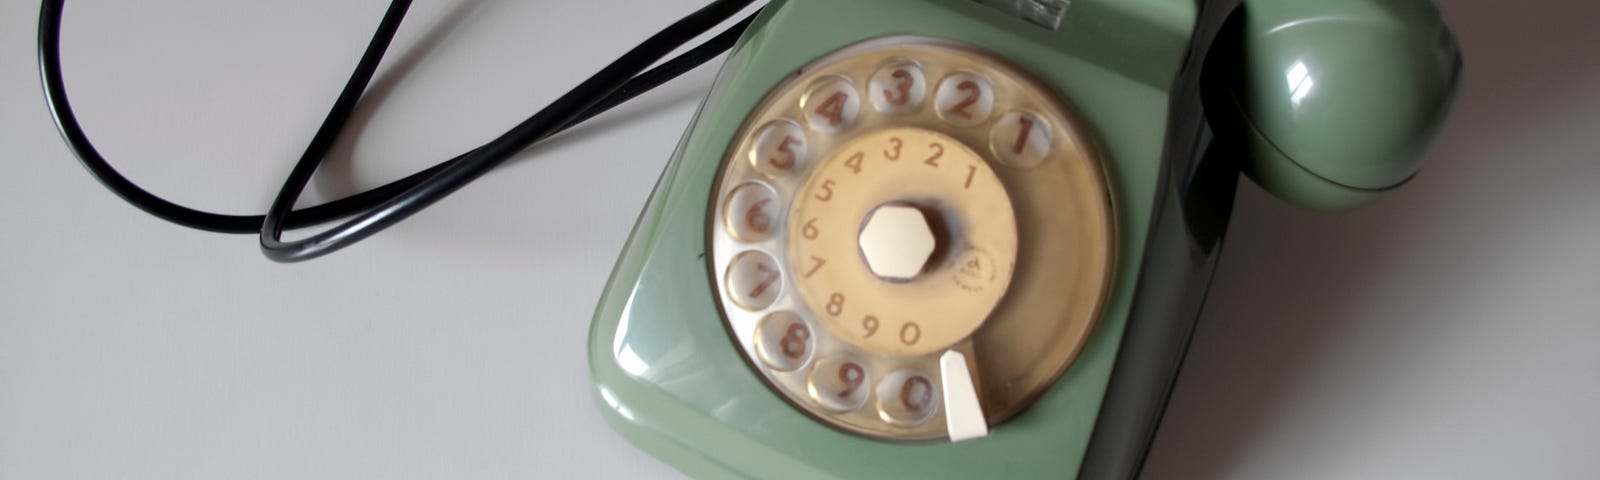 A vintage landline phone